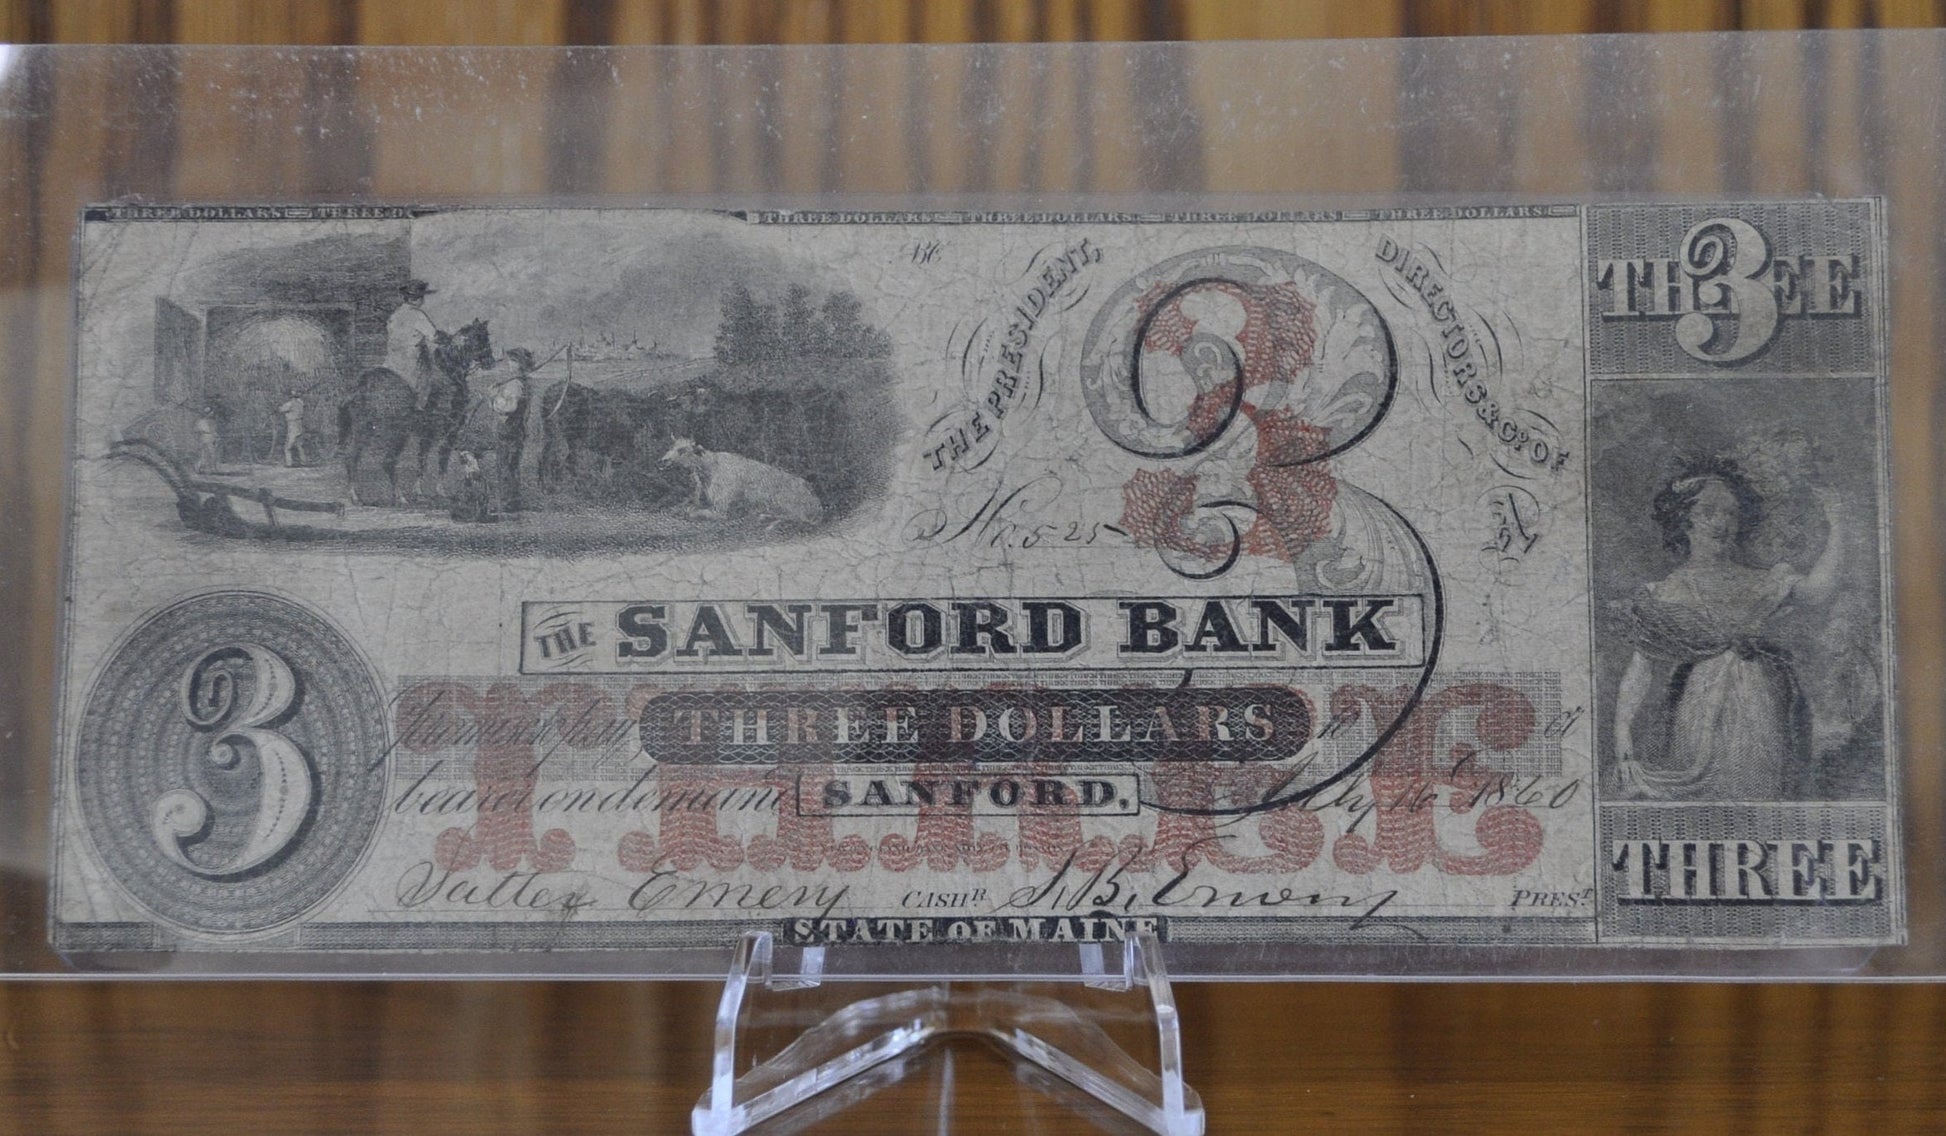 1860 The Sanford Bank 3 Dollar Paper Banknote, Sanford ME - F Condition -Rarer Find, Obsolete Currency - Three Dollar Note 1860 Sanford ME